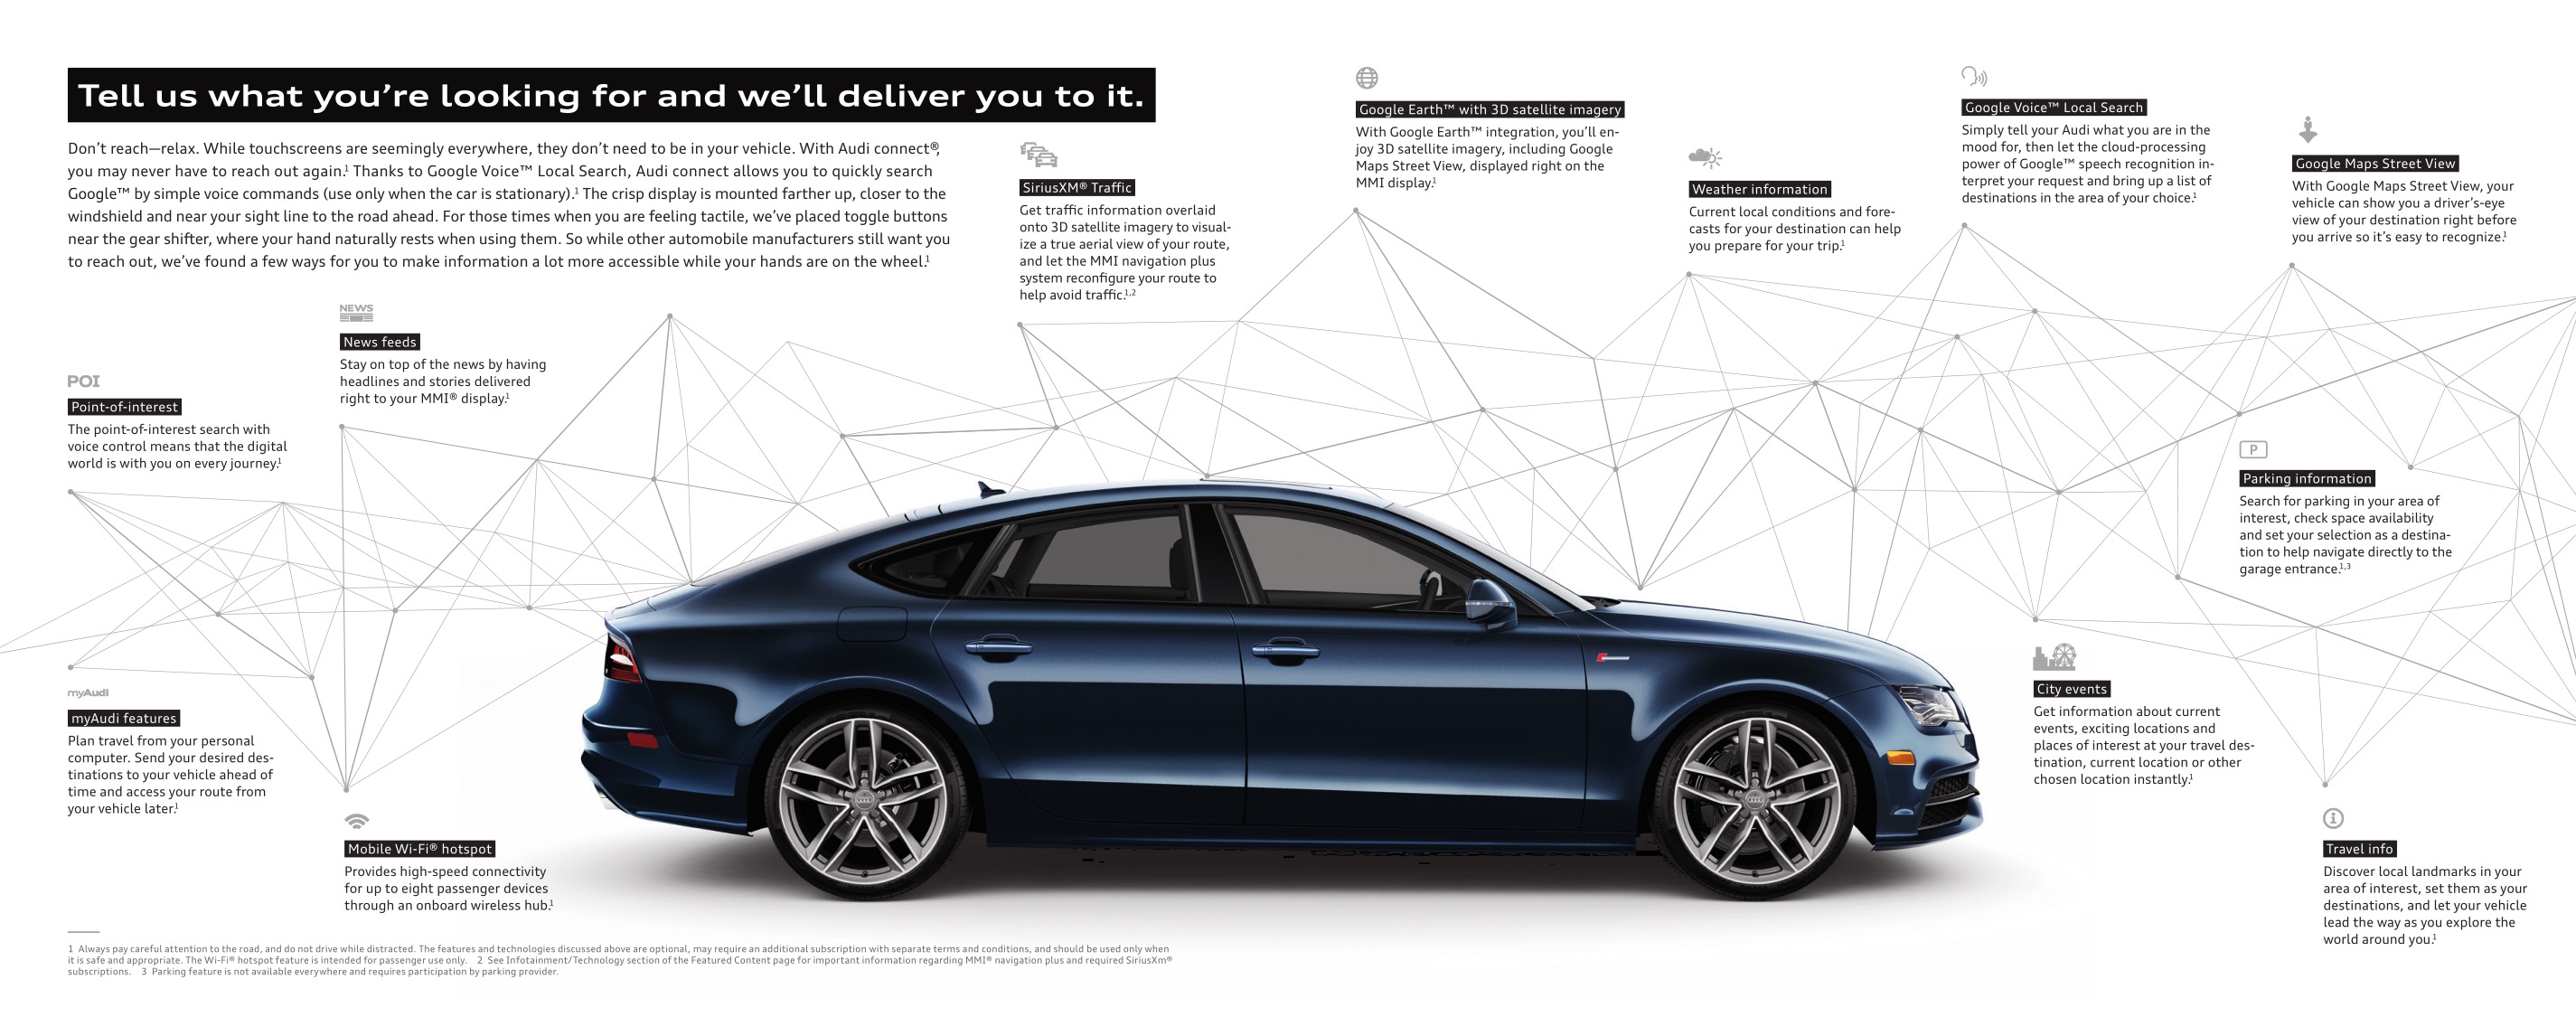 2015 Audi A7 Brochure Page 11